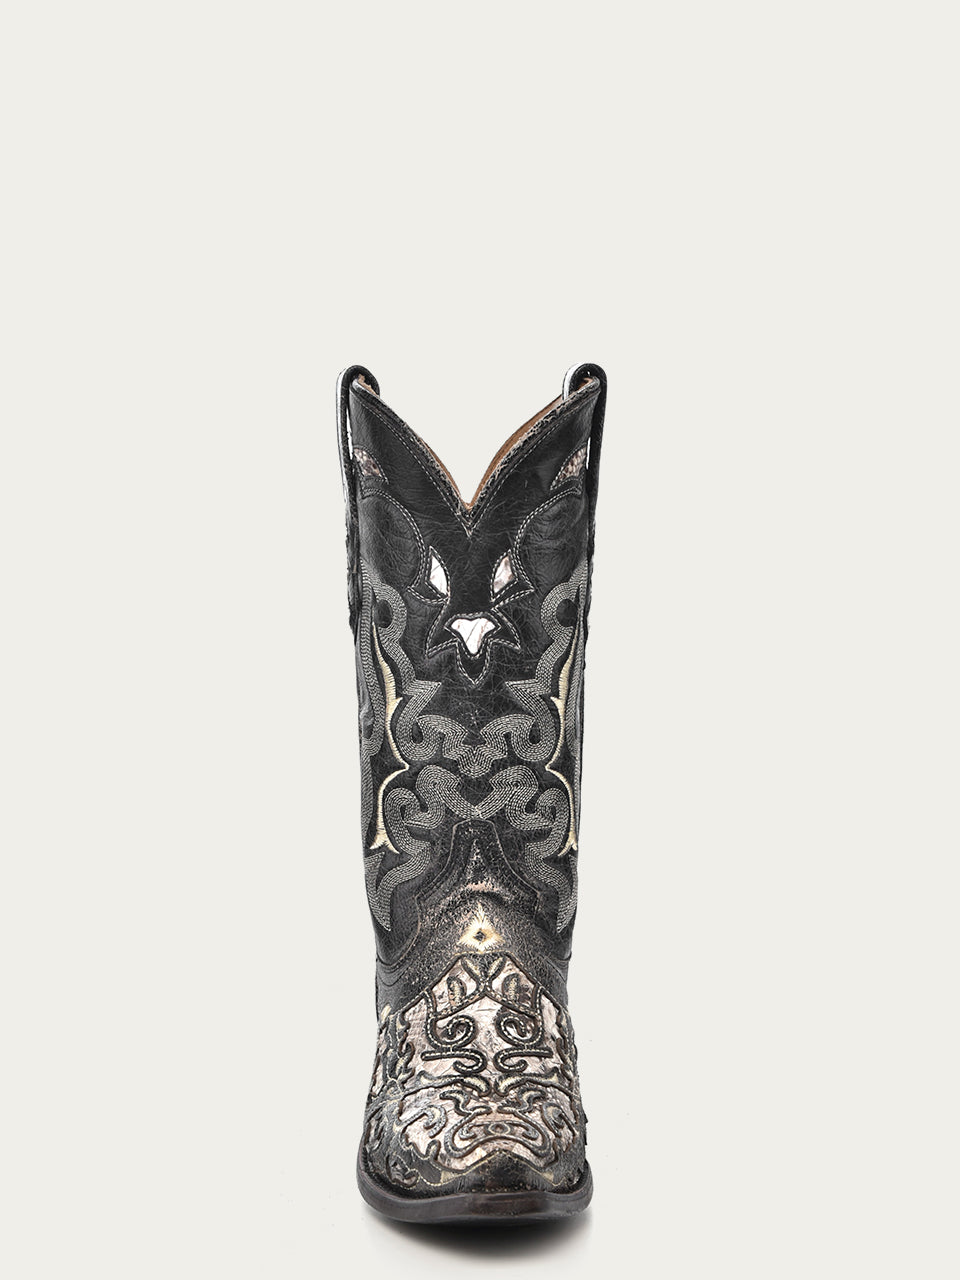 Corral Men's Black Goat & Python Embroidered Snip Toe Cowboy Boots - Dudes Boutique